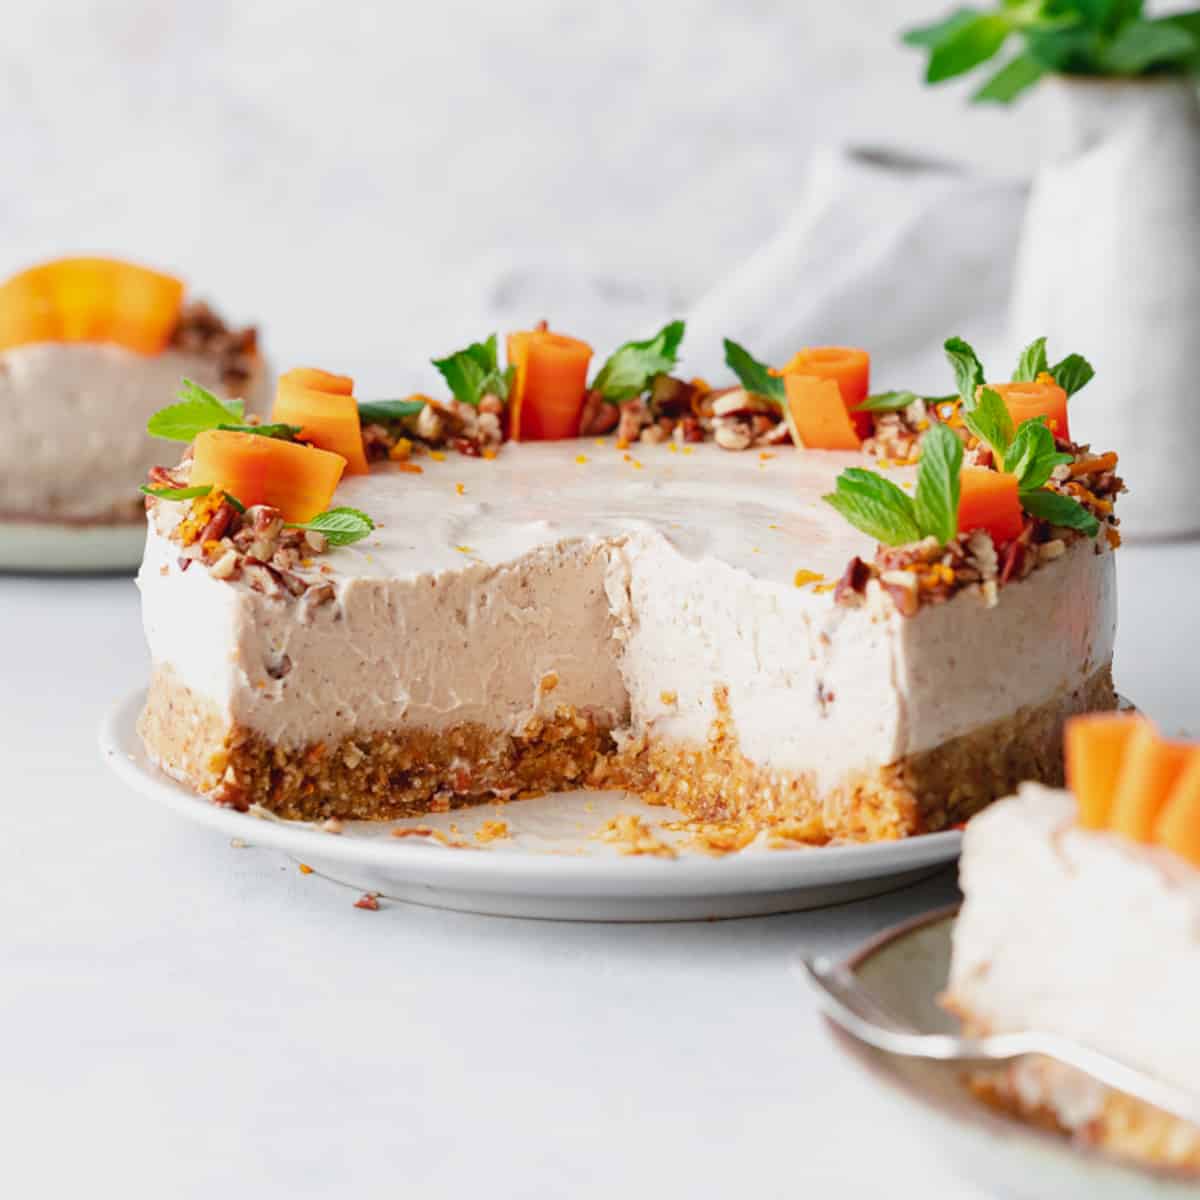 My Favorite Carrot Cake Recipe - Sally's Baking Addiction